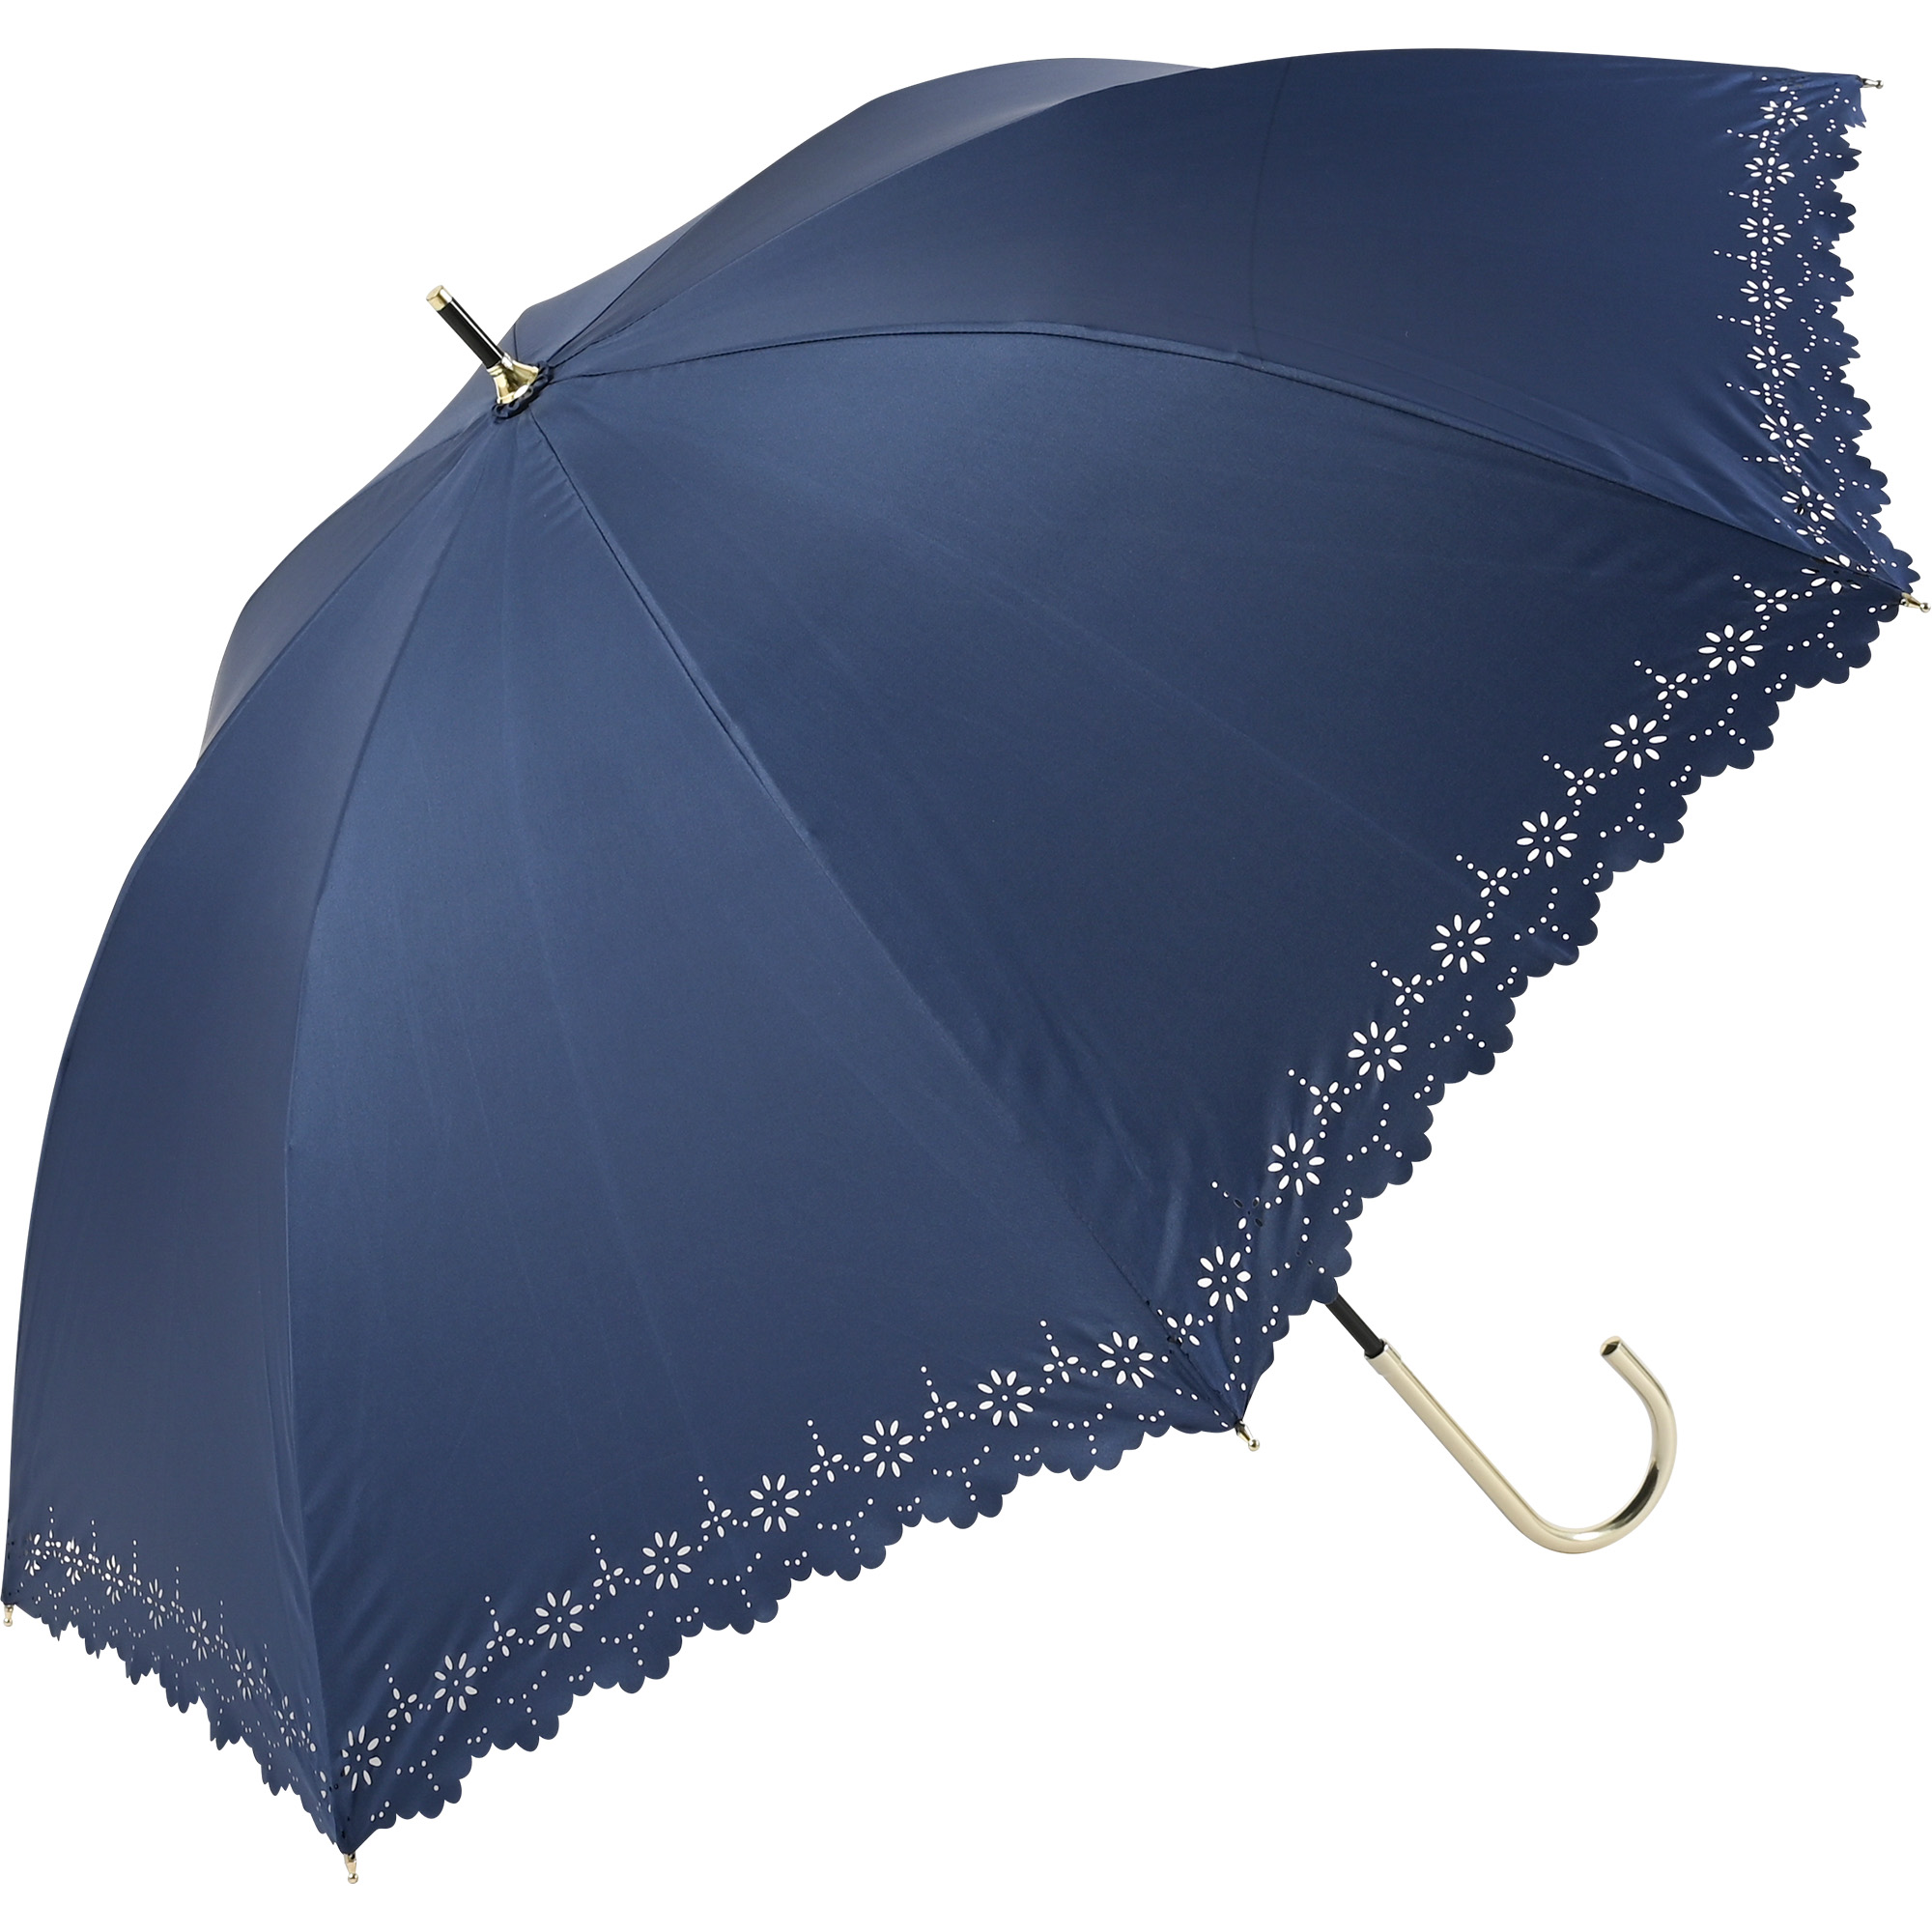 a.s.s.a 公式 日傘 軽量 レディース 傘 晴雨兼用 遮光 遮熱 紫外線遮蔽 uvカット ブラ...